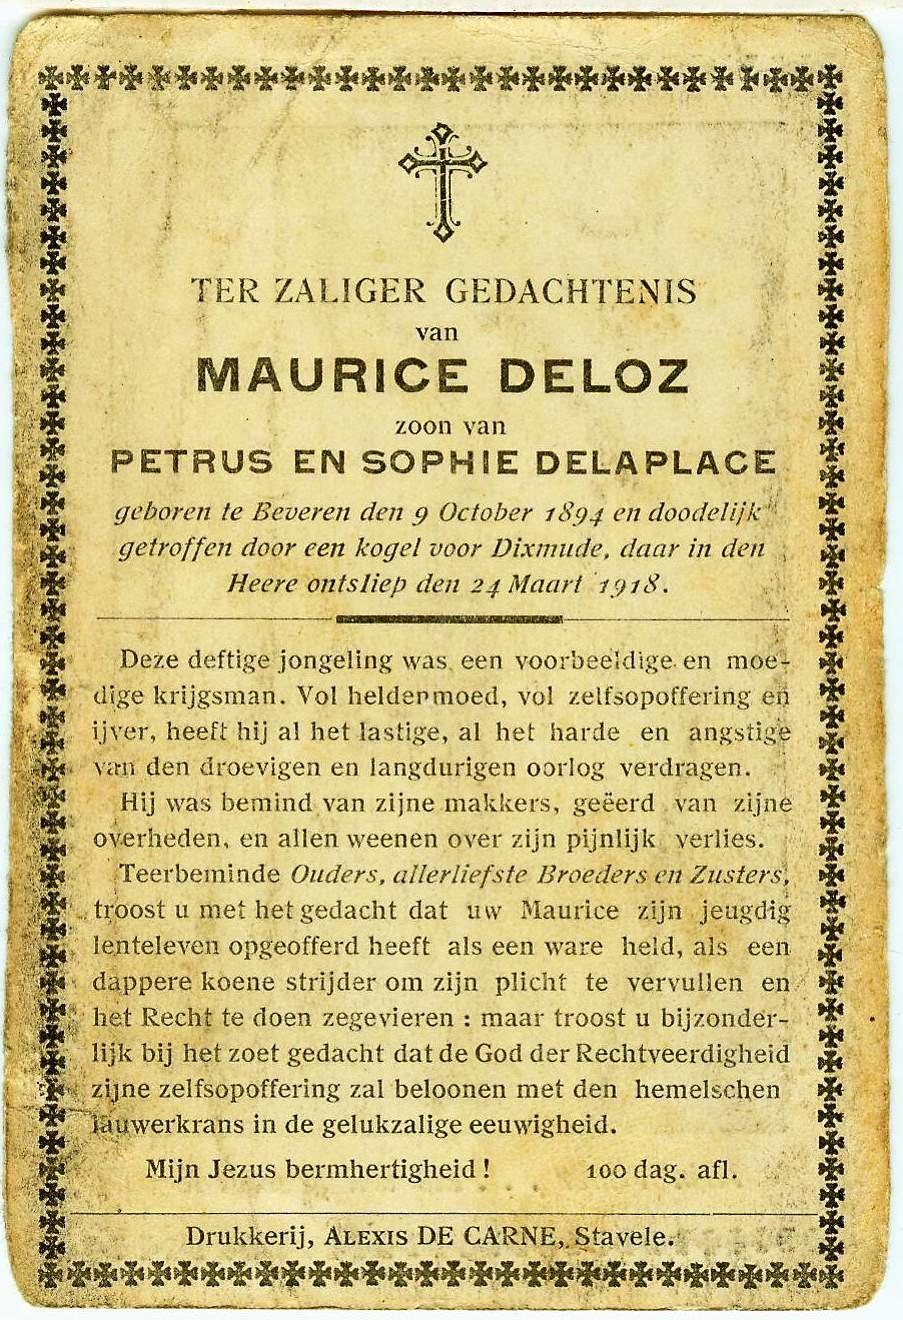 Deloz Maurice 1918-03-24 